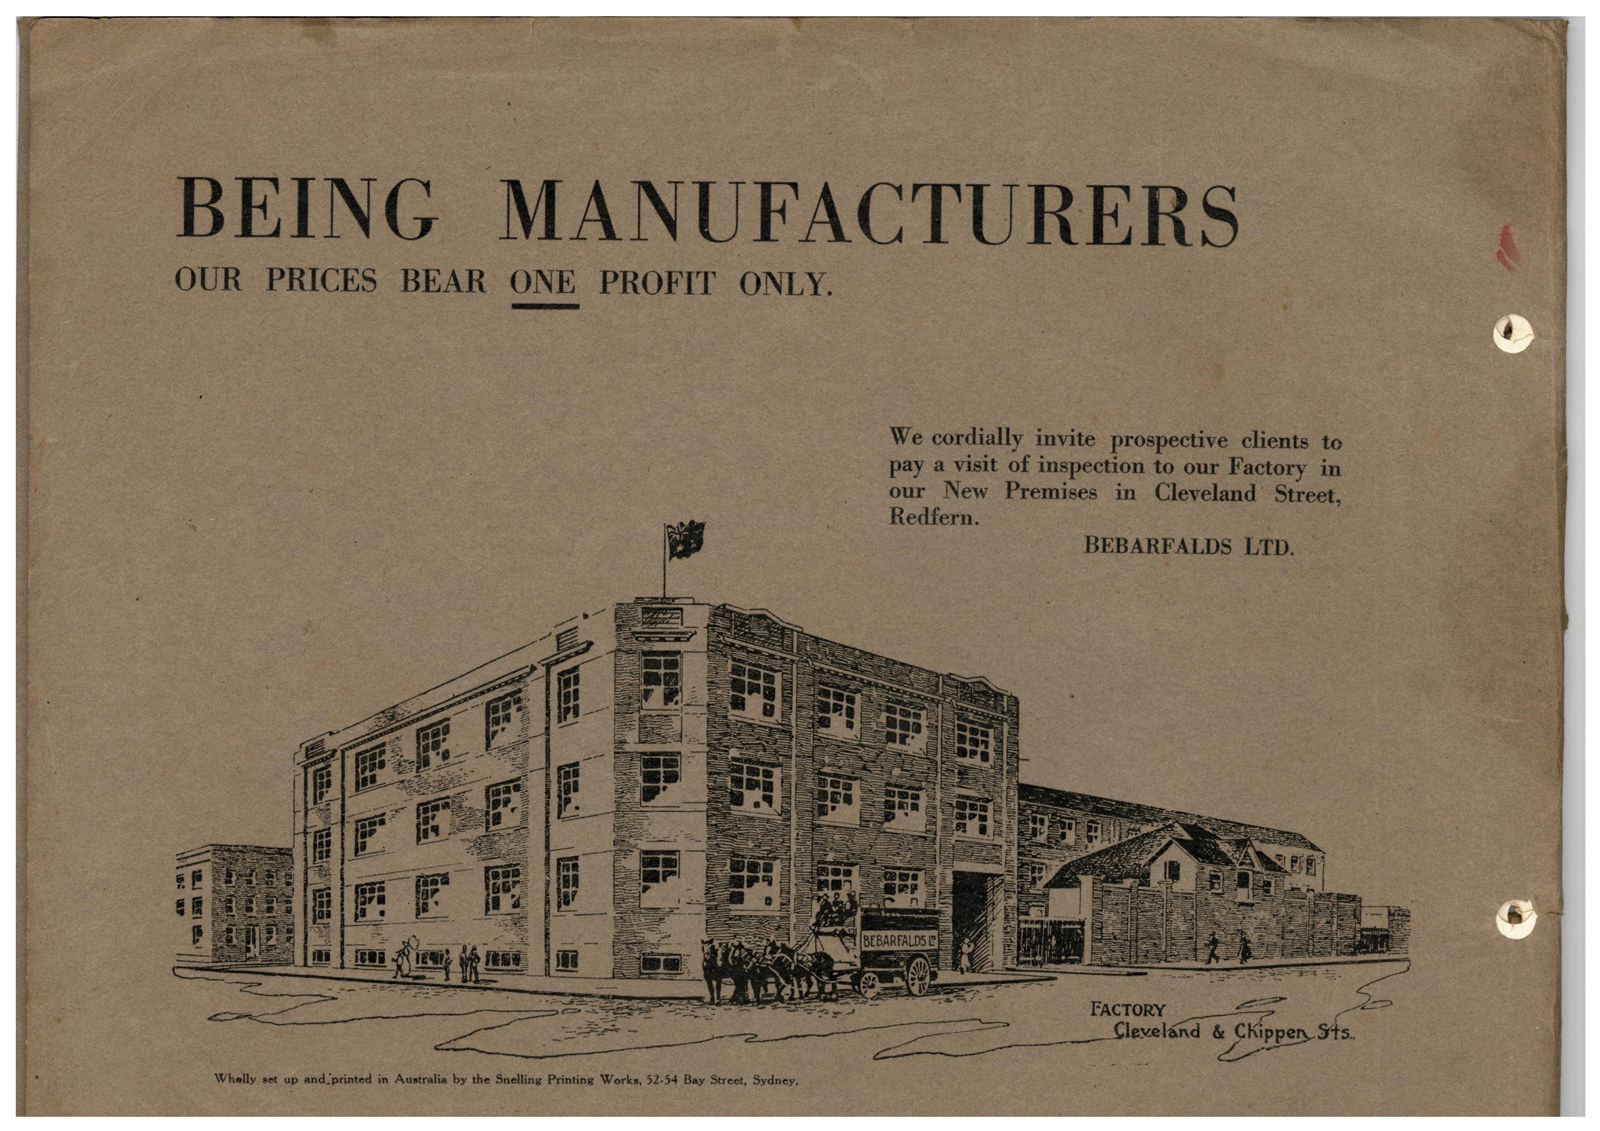 Bebarfald's factory